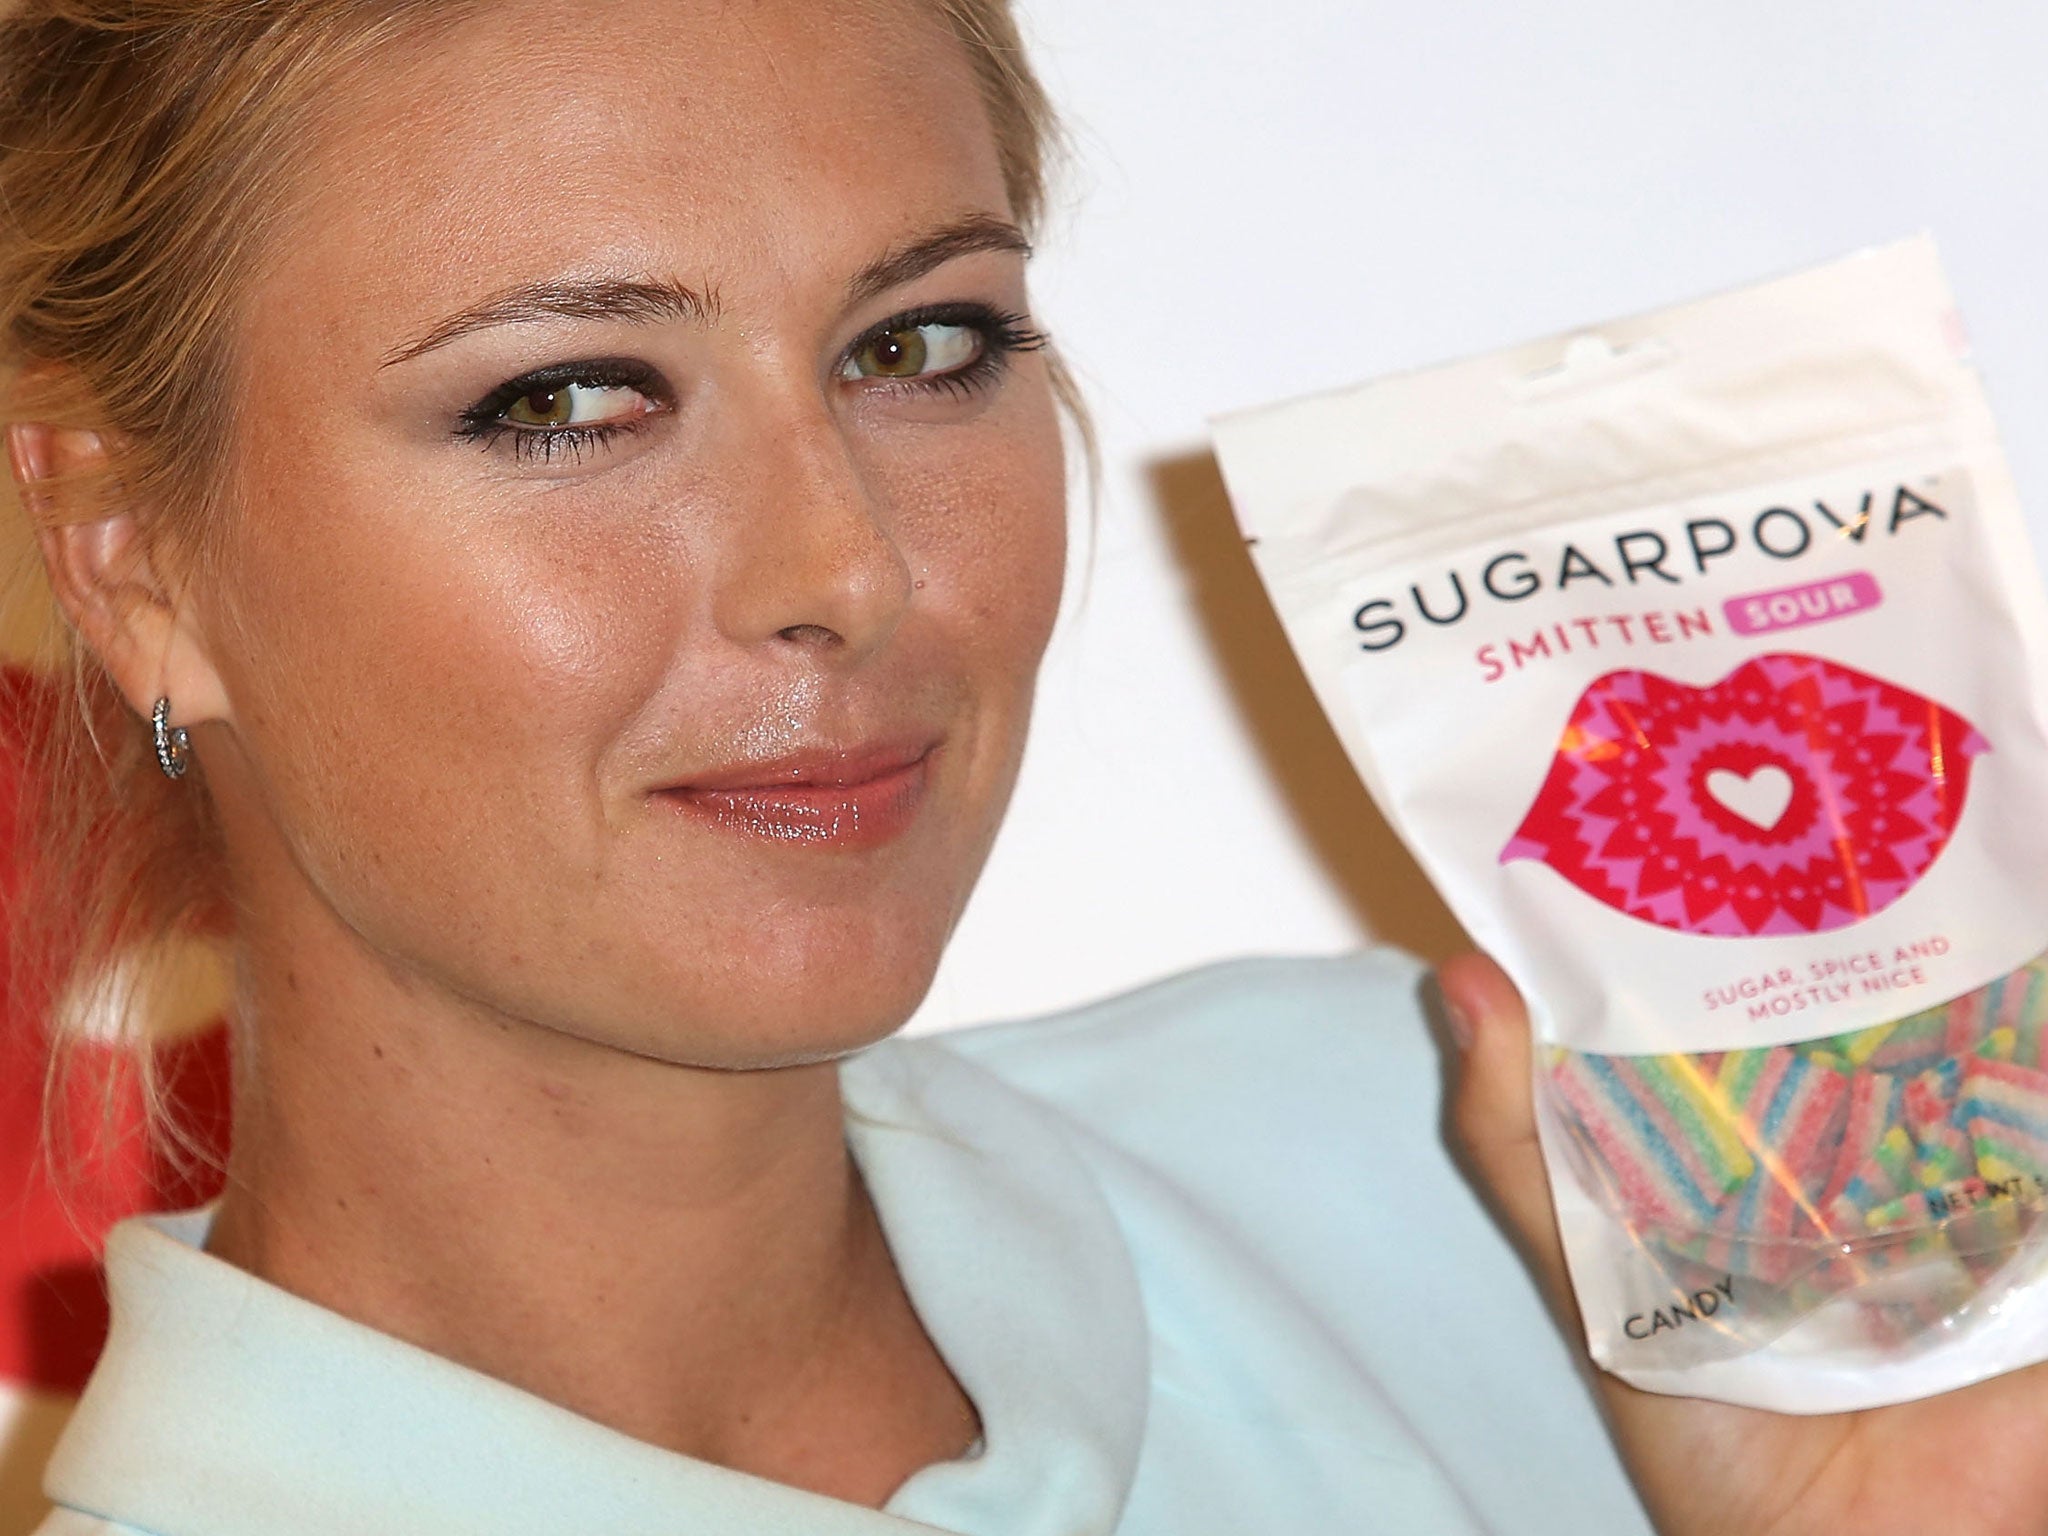 Maria Sharapova has her own range of sweets called Sugarpova